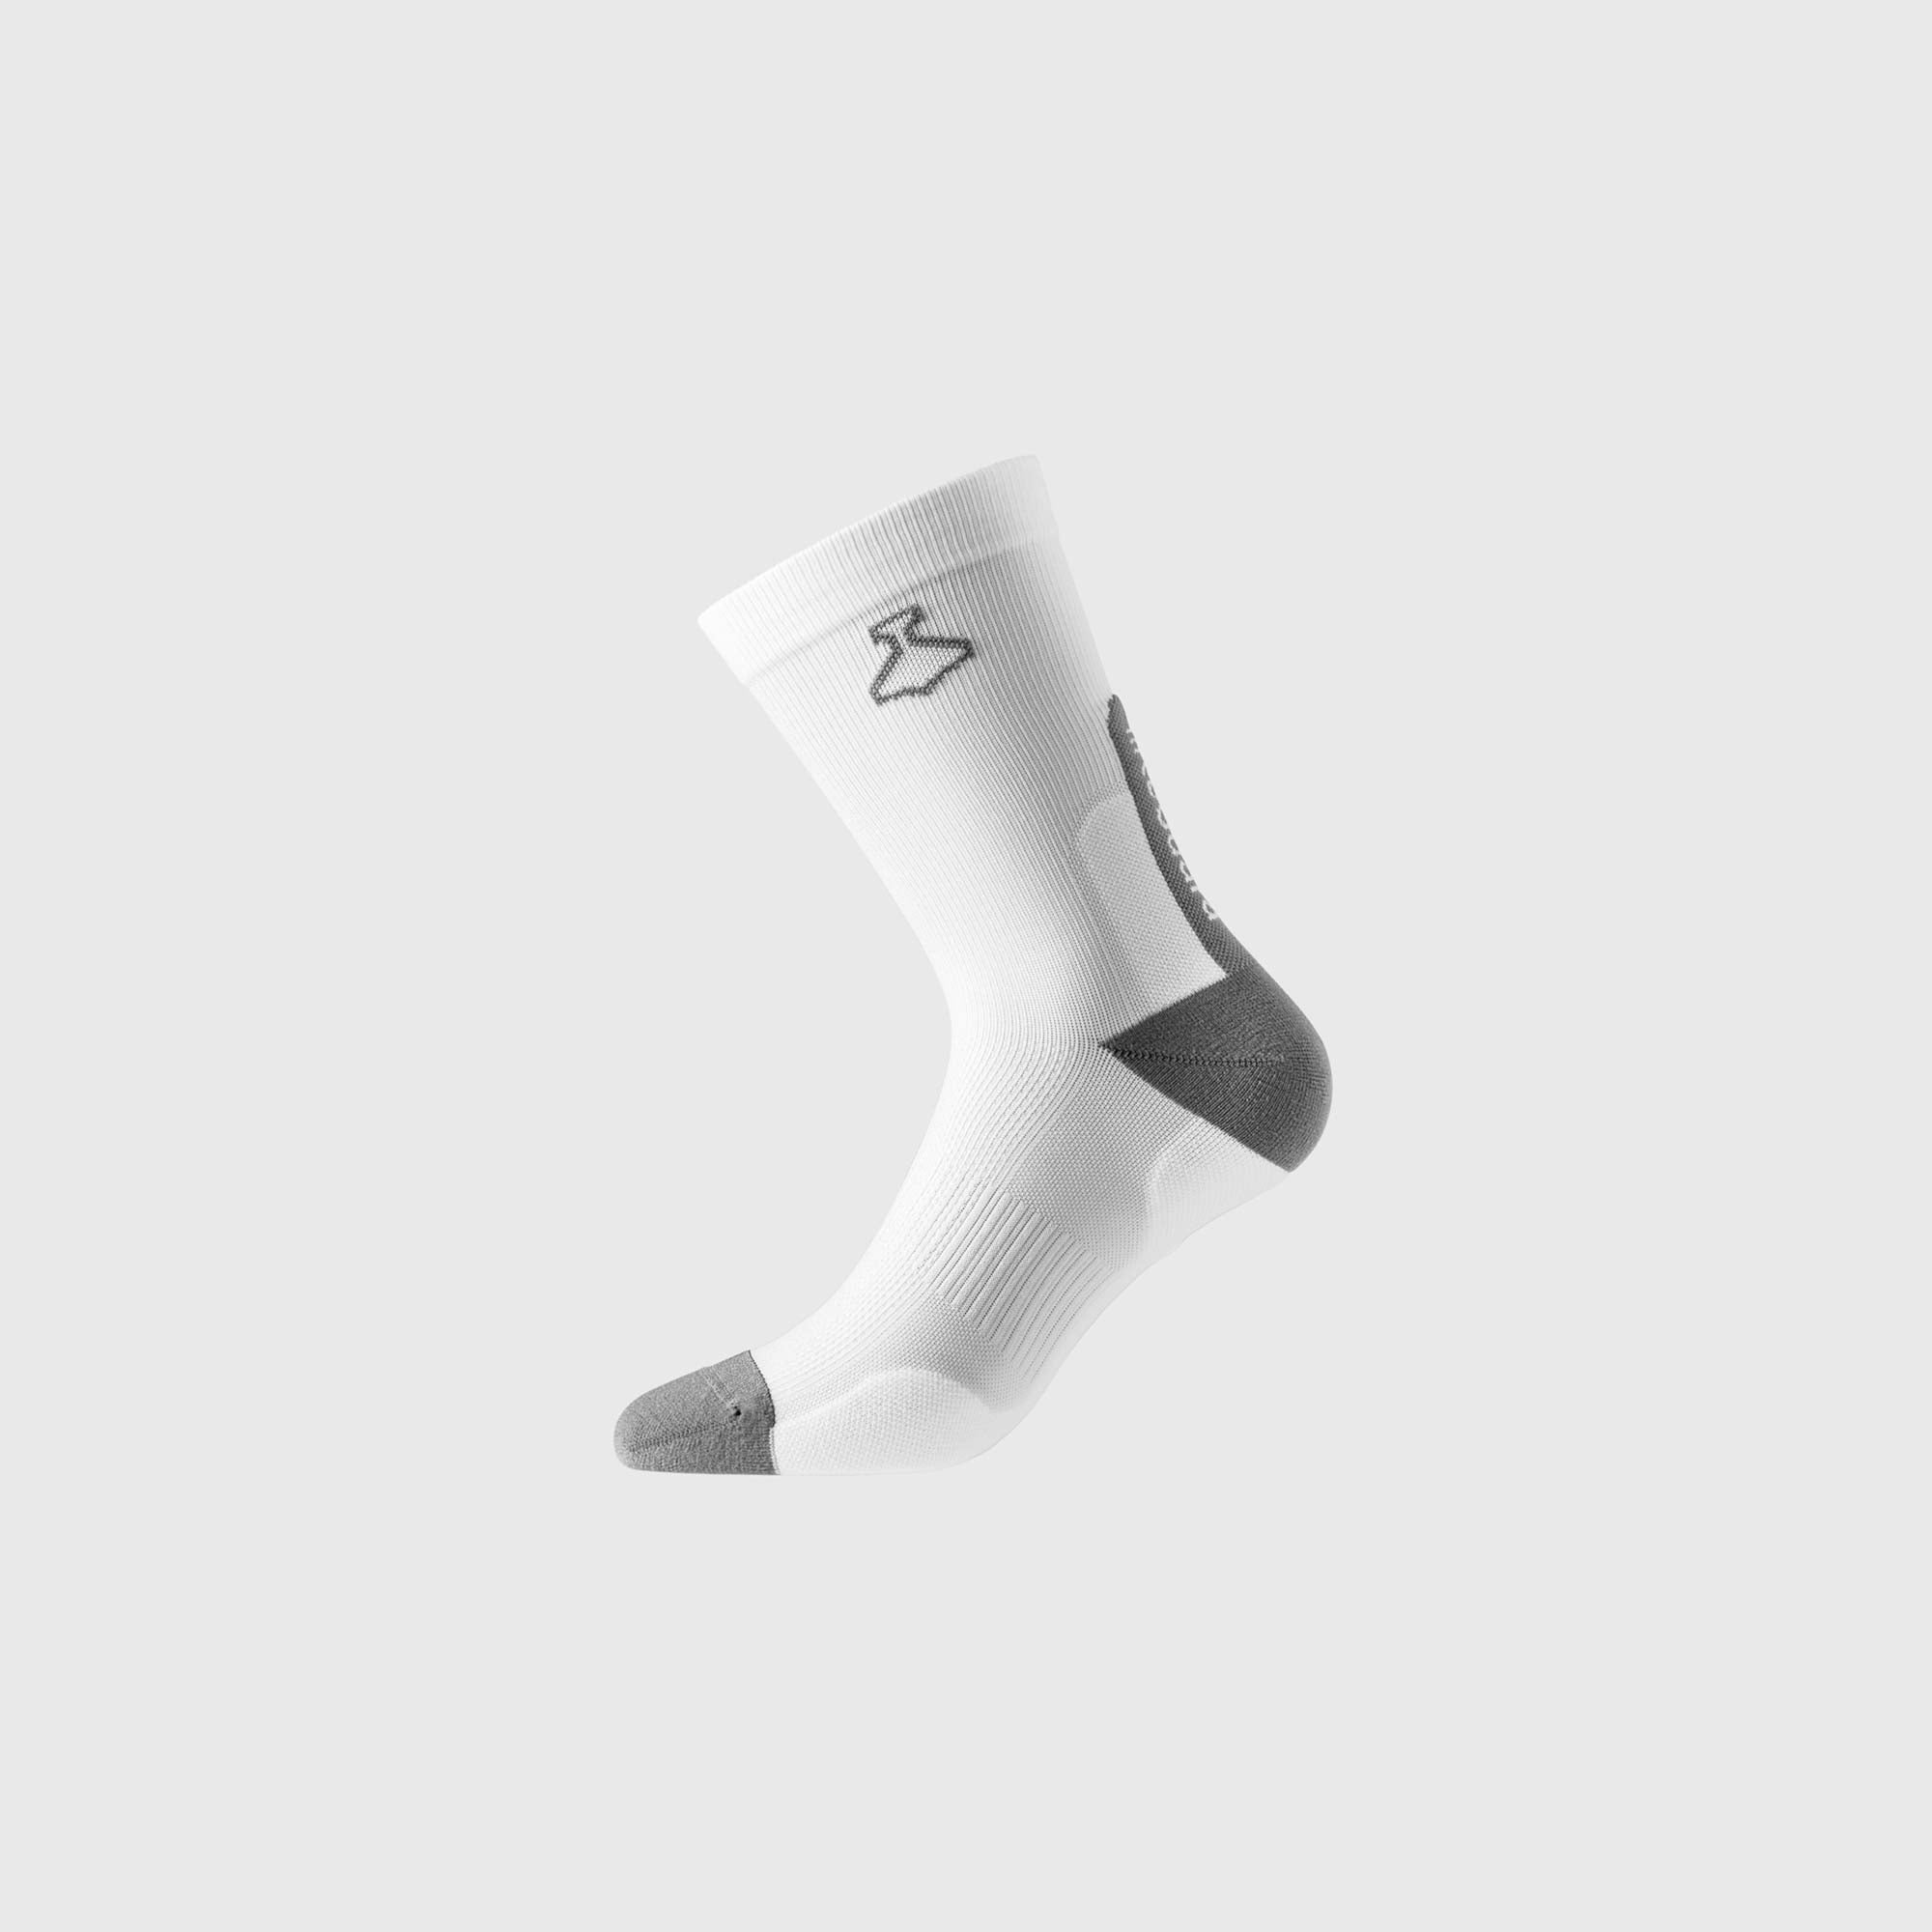 Liiteguard ULTRALIGHT Medium socks White